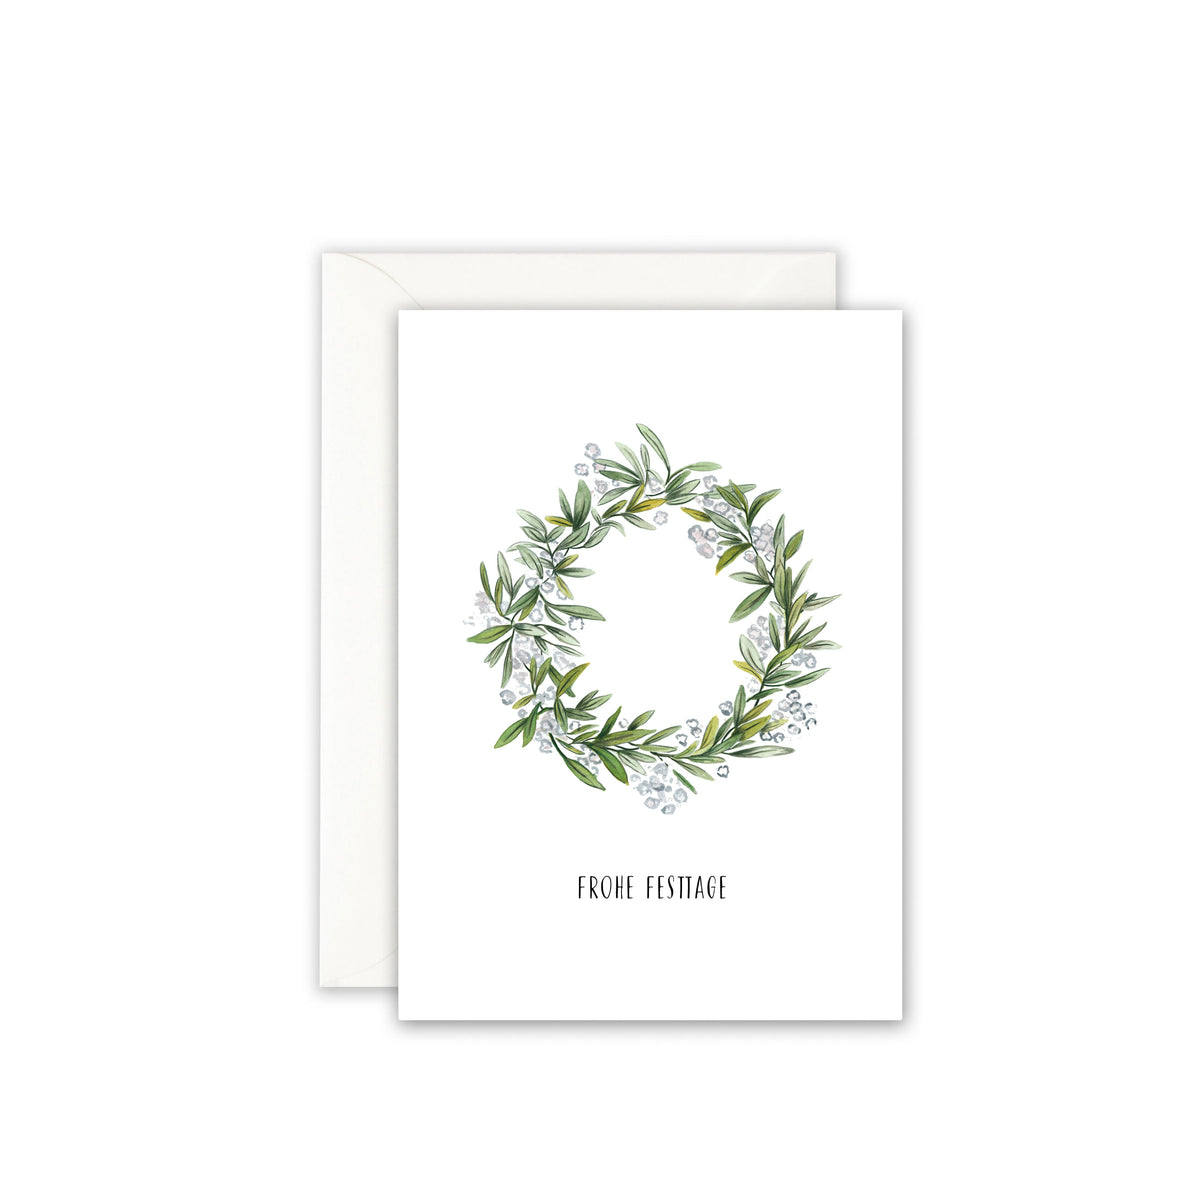 Greeting Card · Merry Christmas